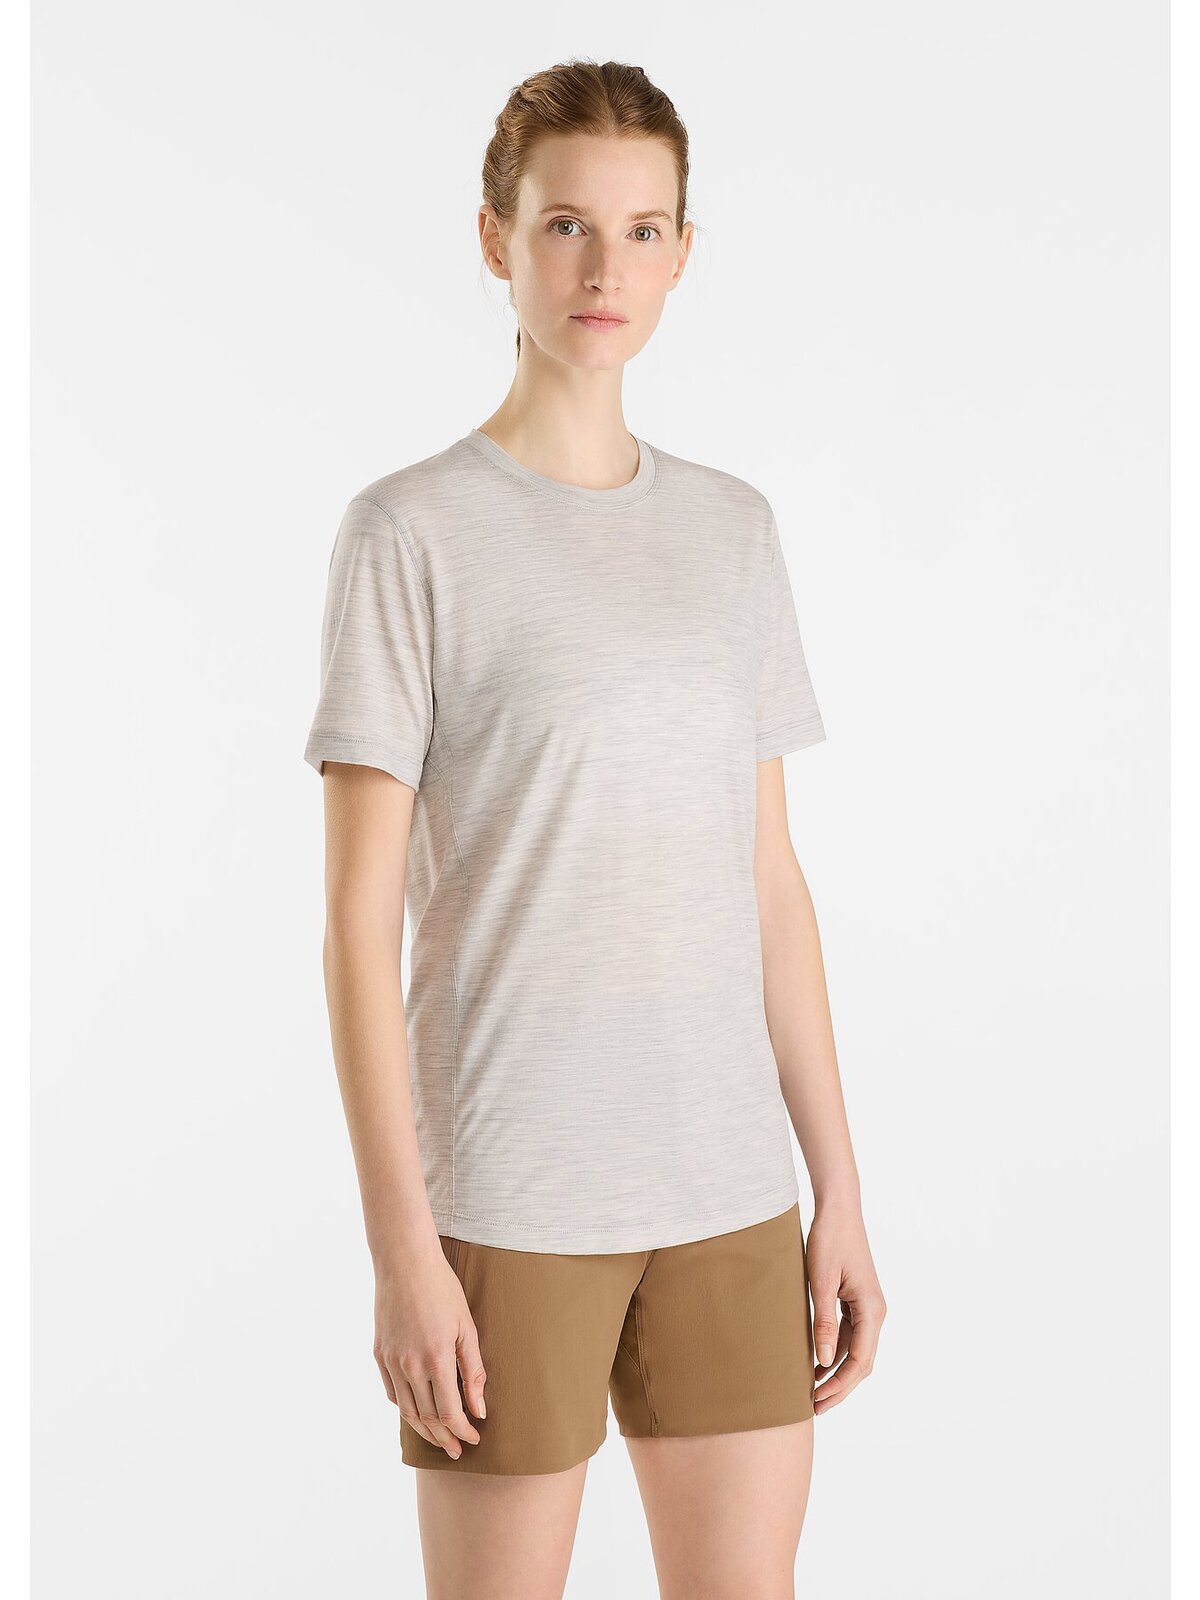 Lana Merino Crew Neck Short Sleeve Shirt for Women